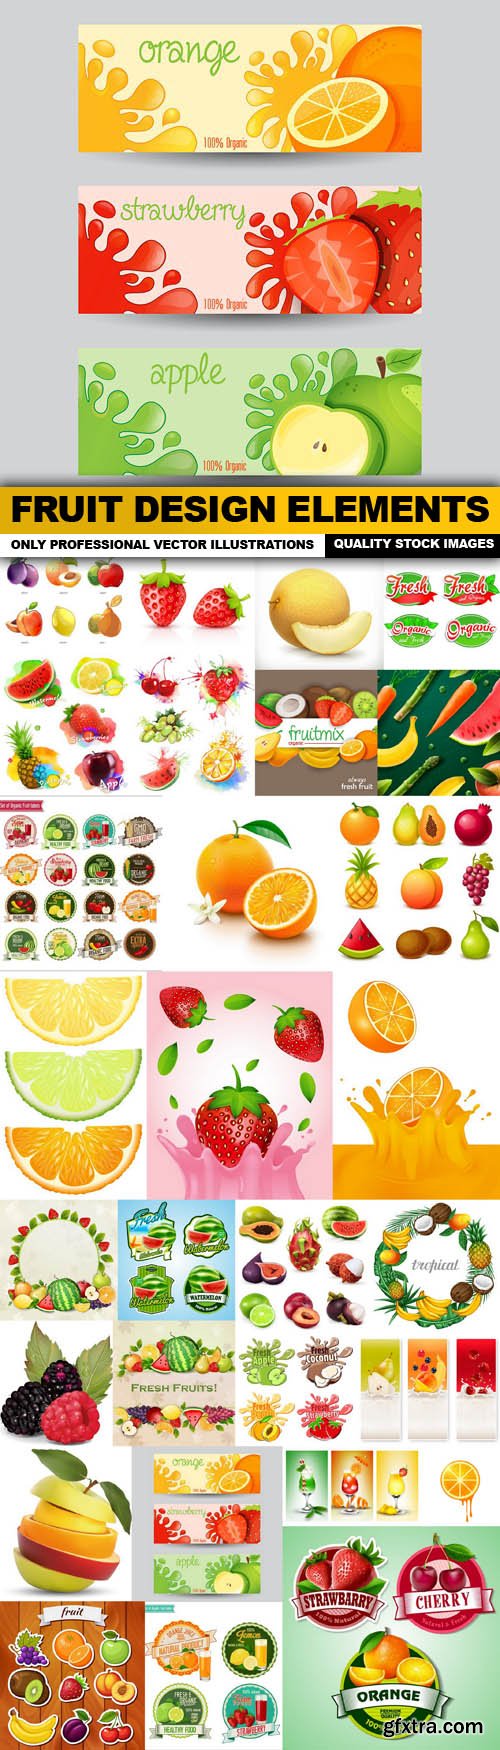 Fruit Design Elements - 30 Vector